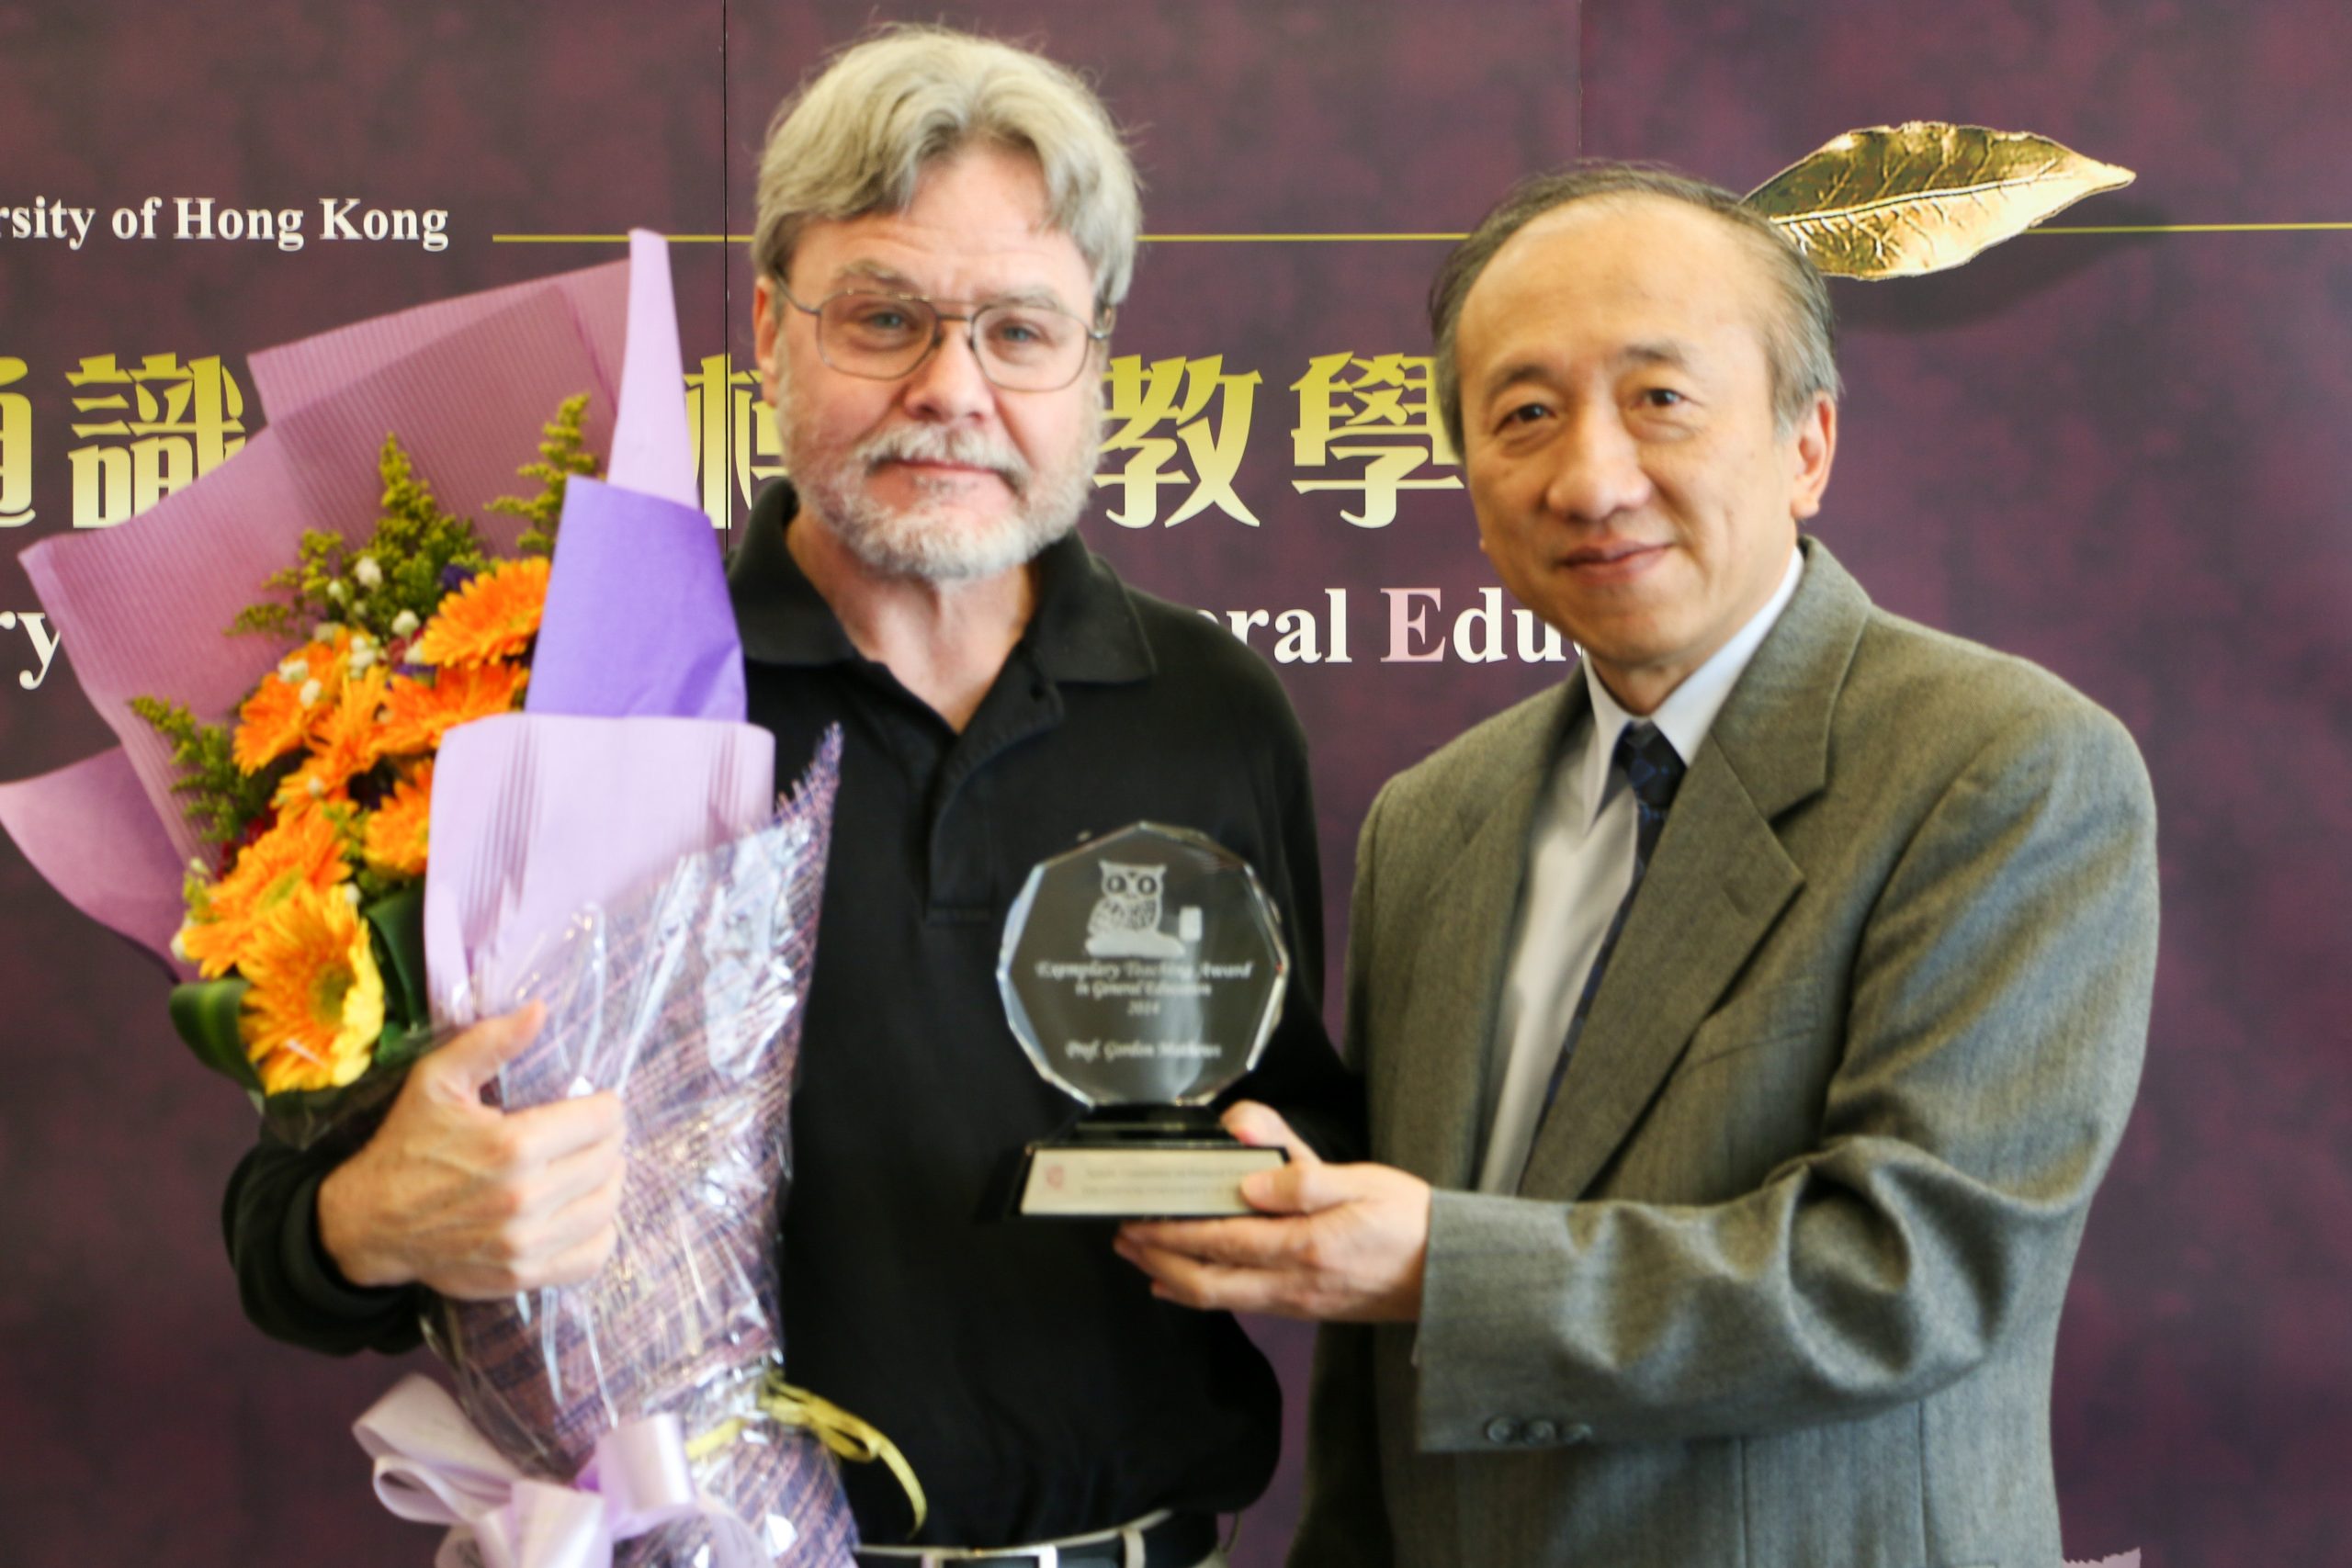 Presentation of Exemplary Teaching Award in General Education to Professor Gordon Mathews